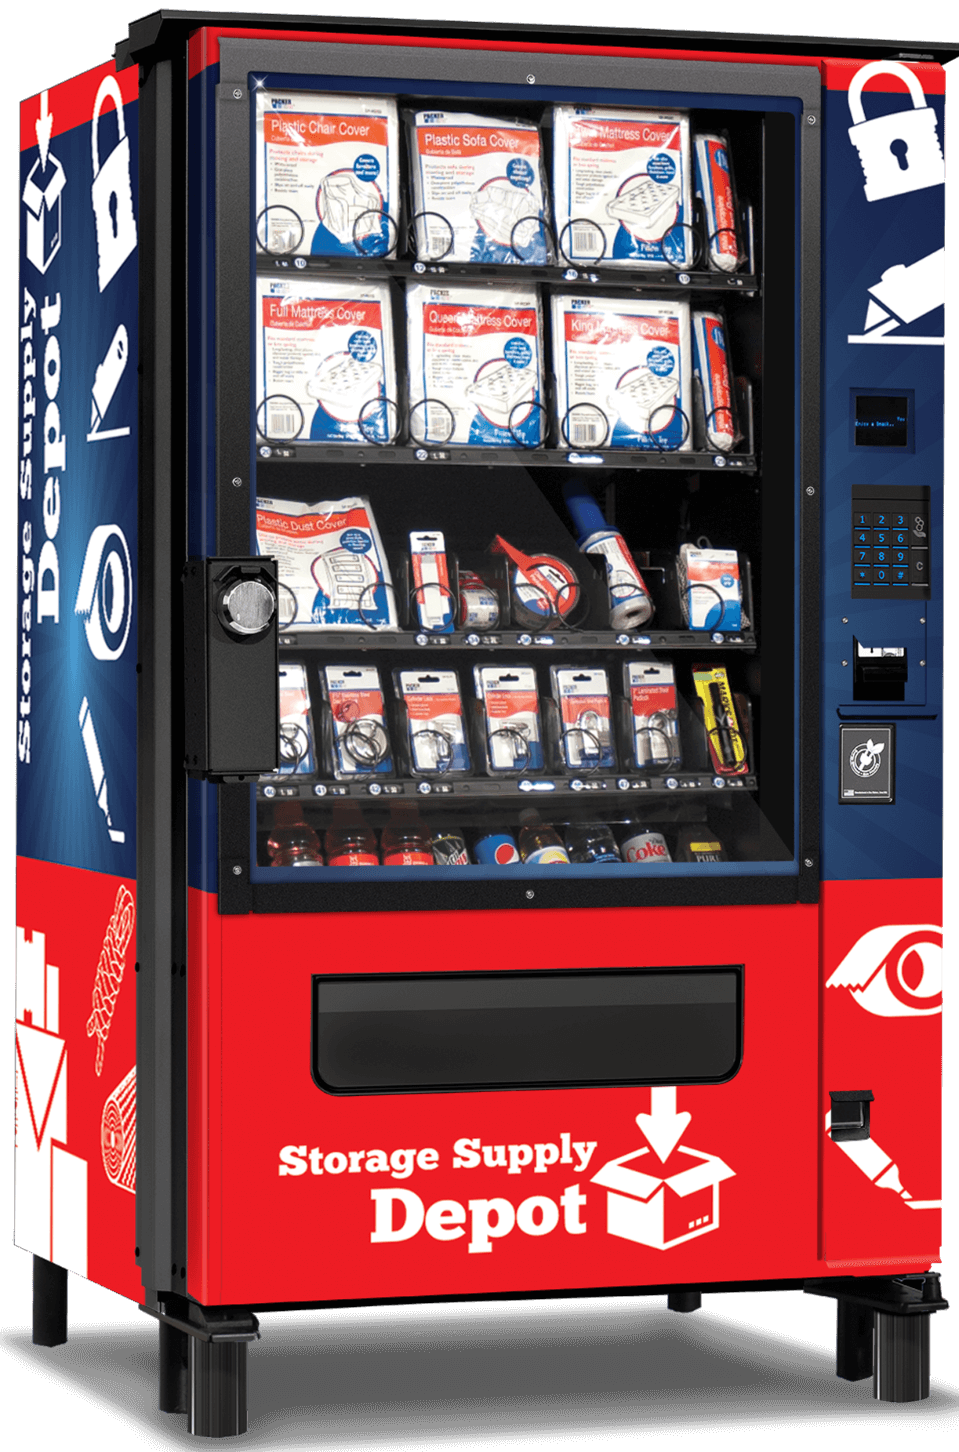 Storage Supply Depot Vending Machine 